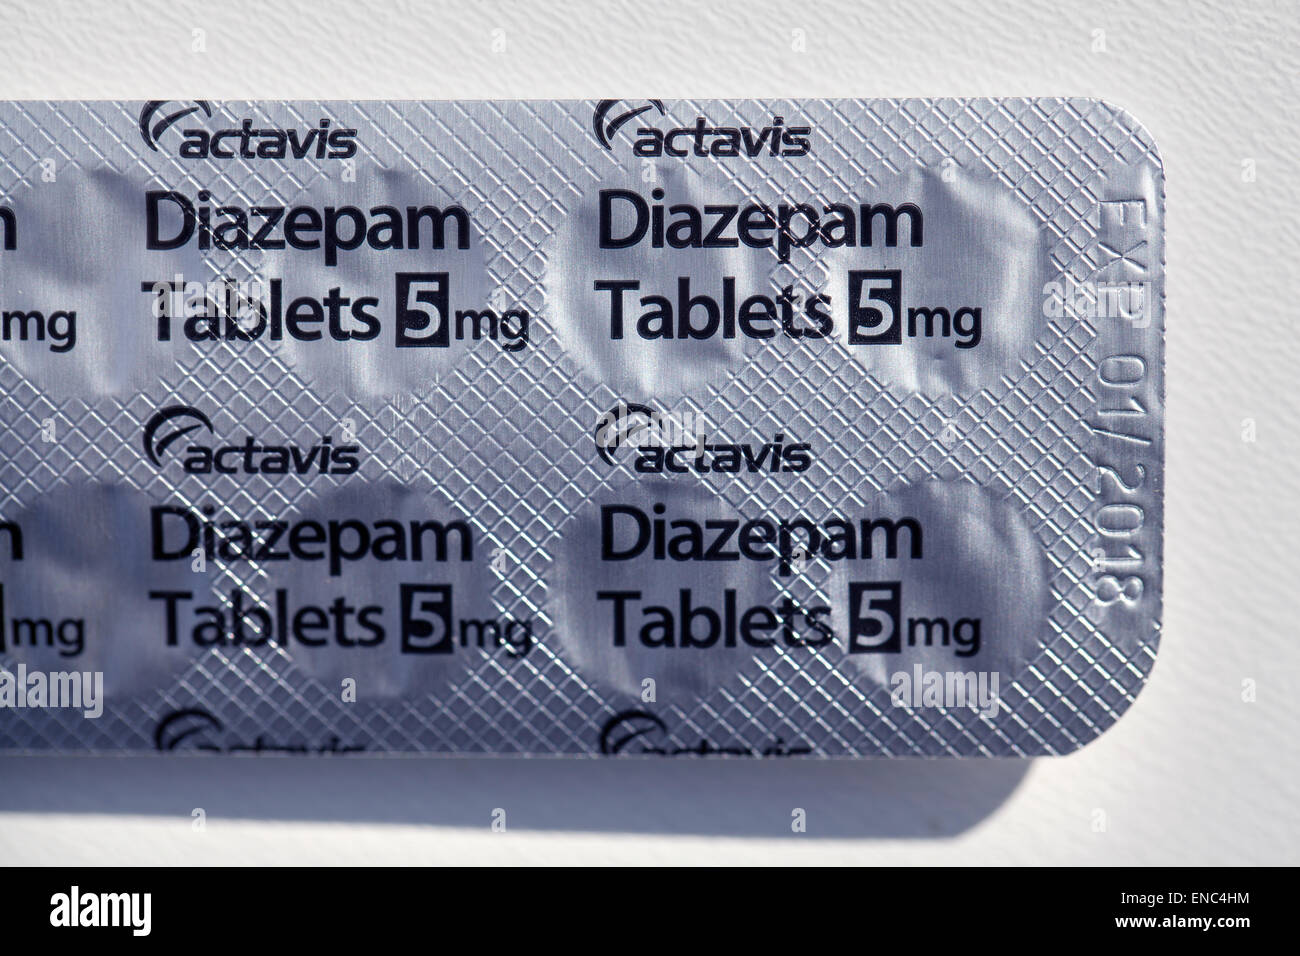 Actavis Diazepam Buy